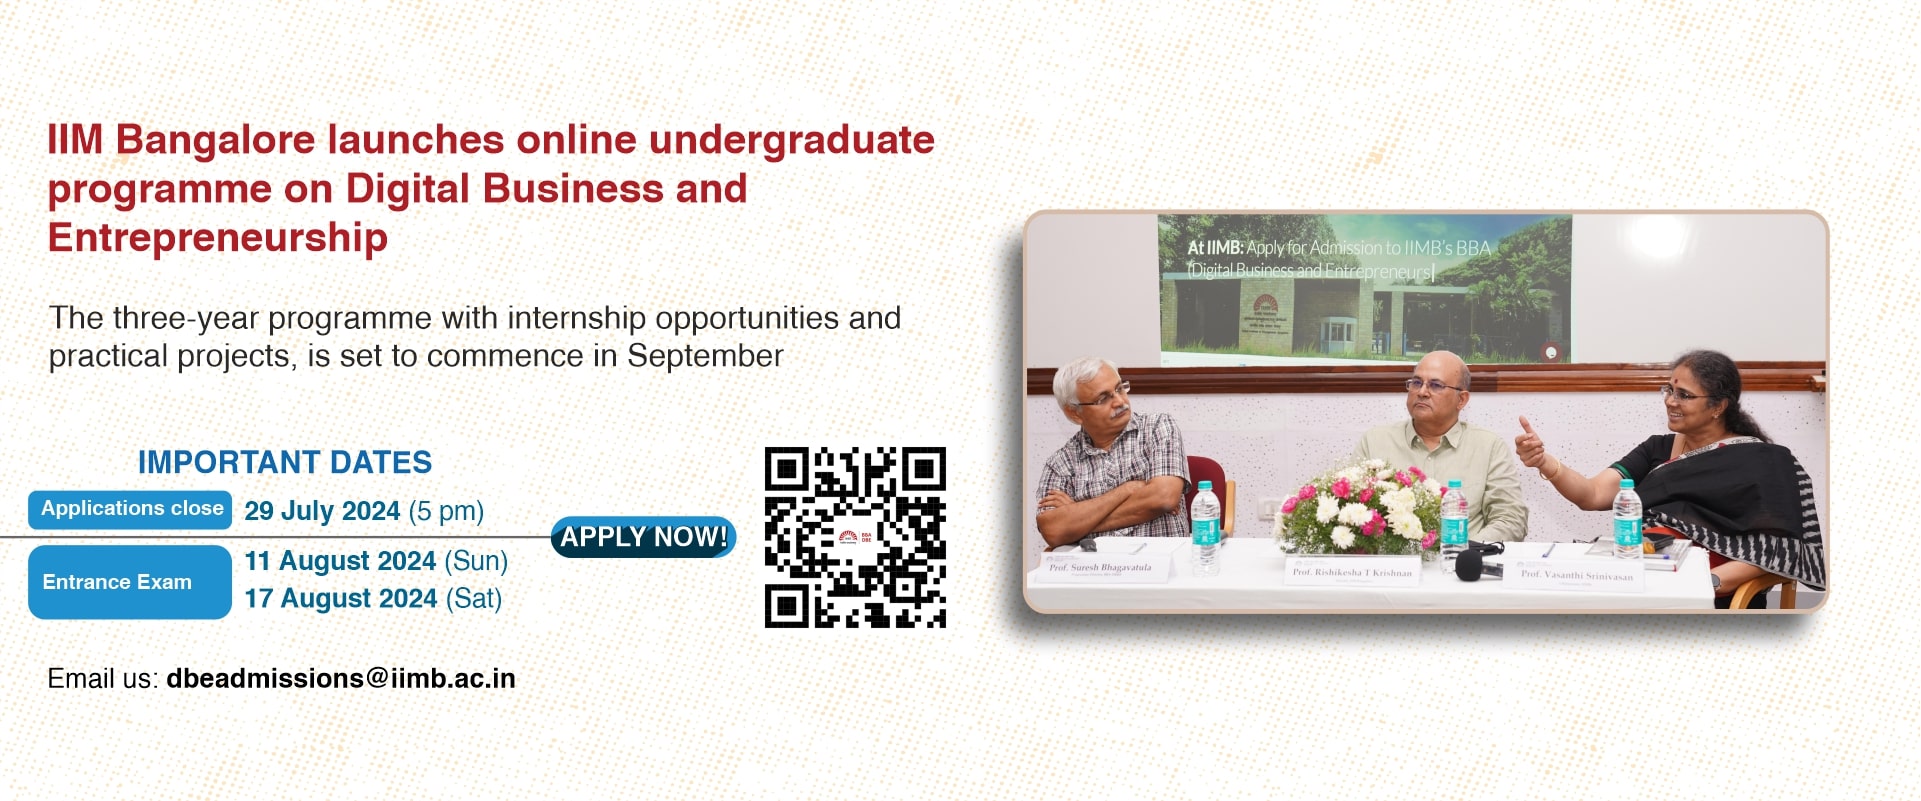  IIM Bangalore launches online undergraduate programme on Digital Business and Entrepreneurship 